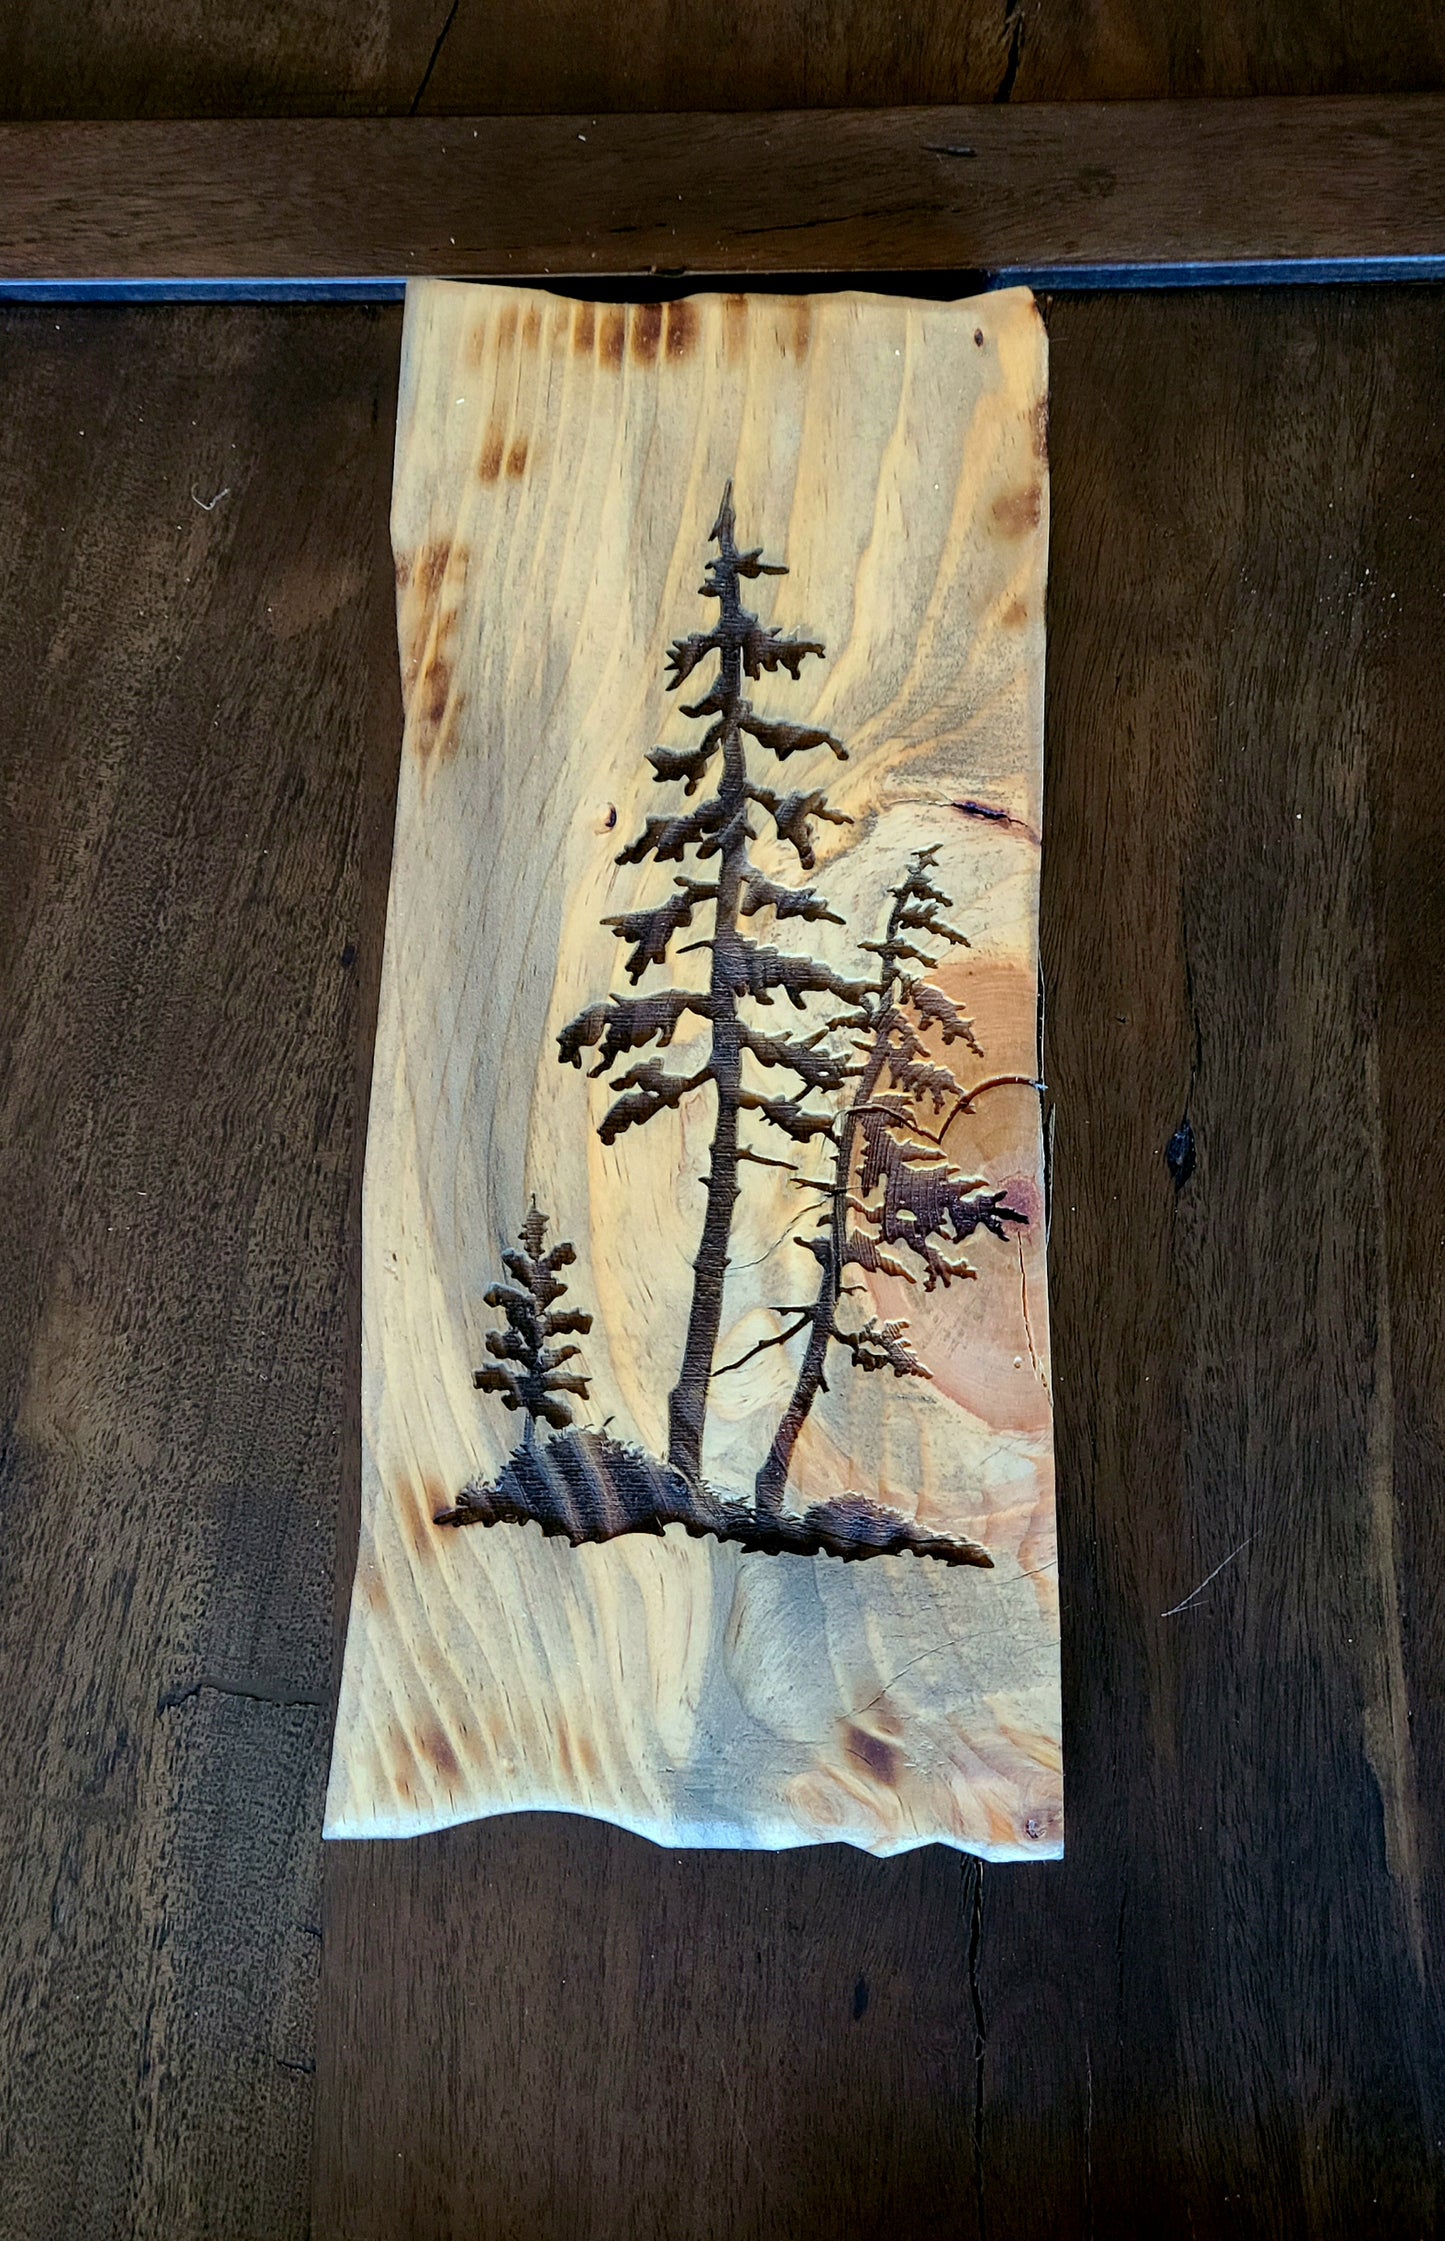 Rustic Engraved Pine Trees Tree Wall Decor